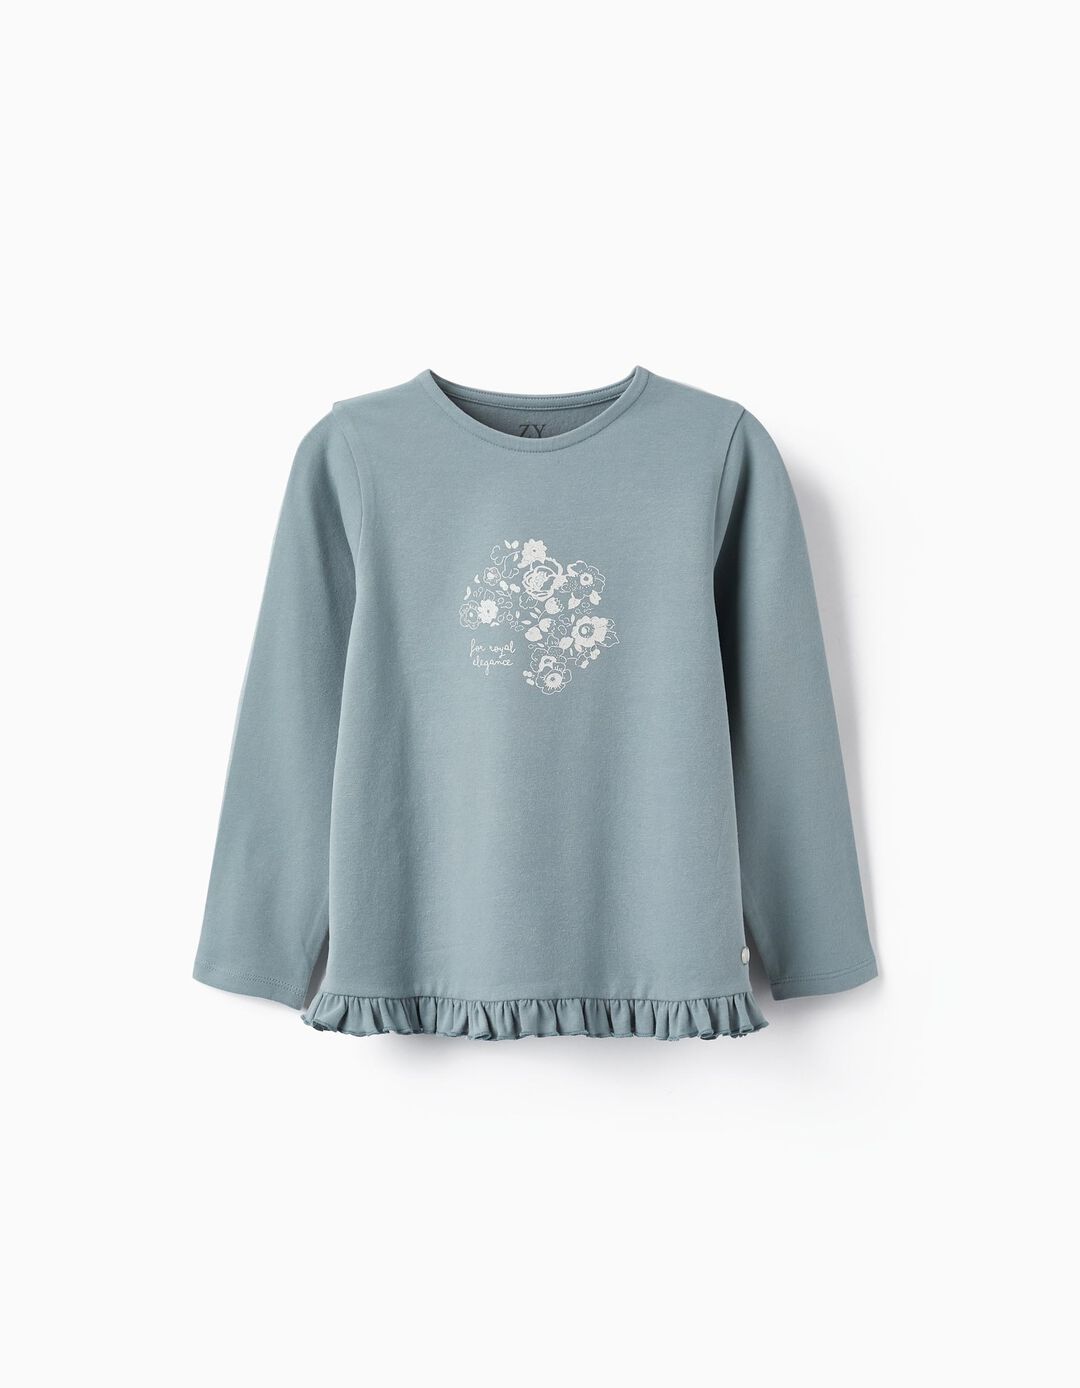 Long Sleeve Cotton T-shirt for Girls 'Royal', Bluish Grey